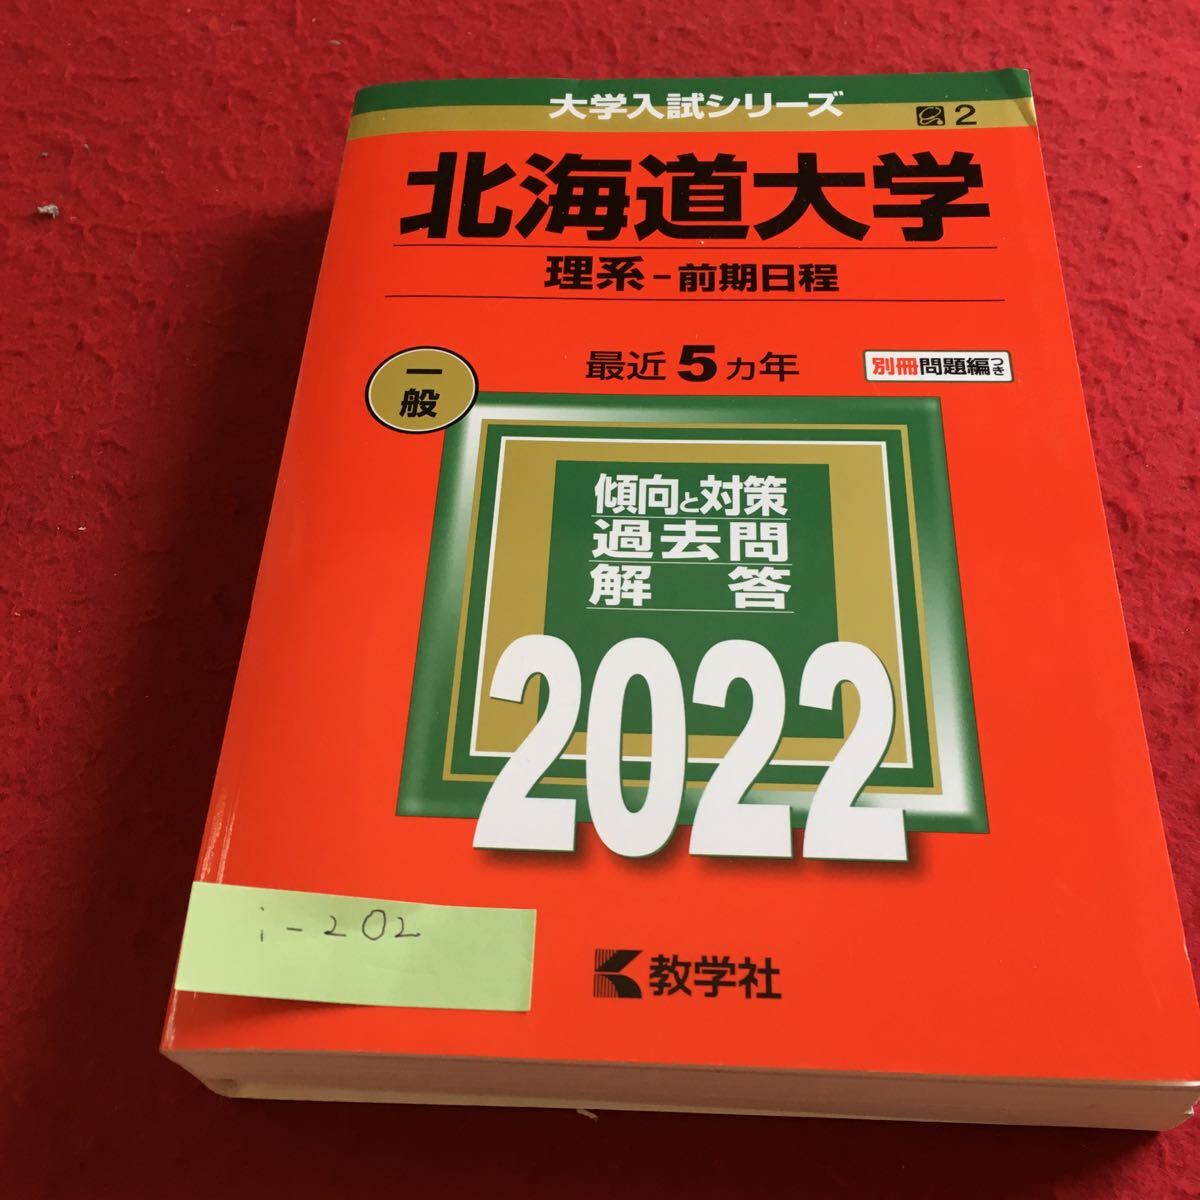 i-202 北海道大学理系 前期日程 2022年 教学社※10_画像1